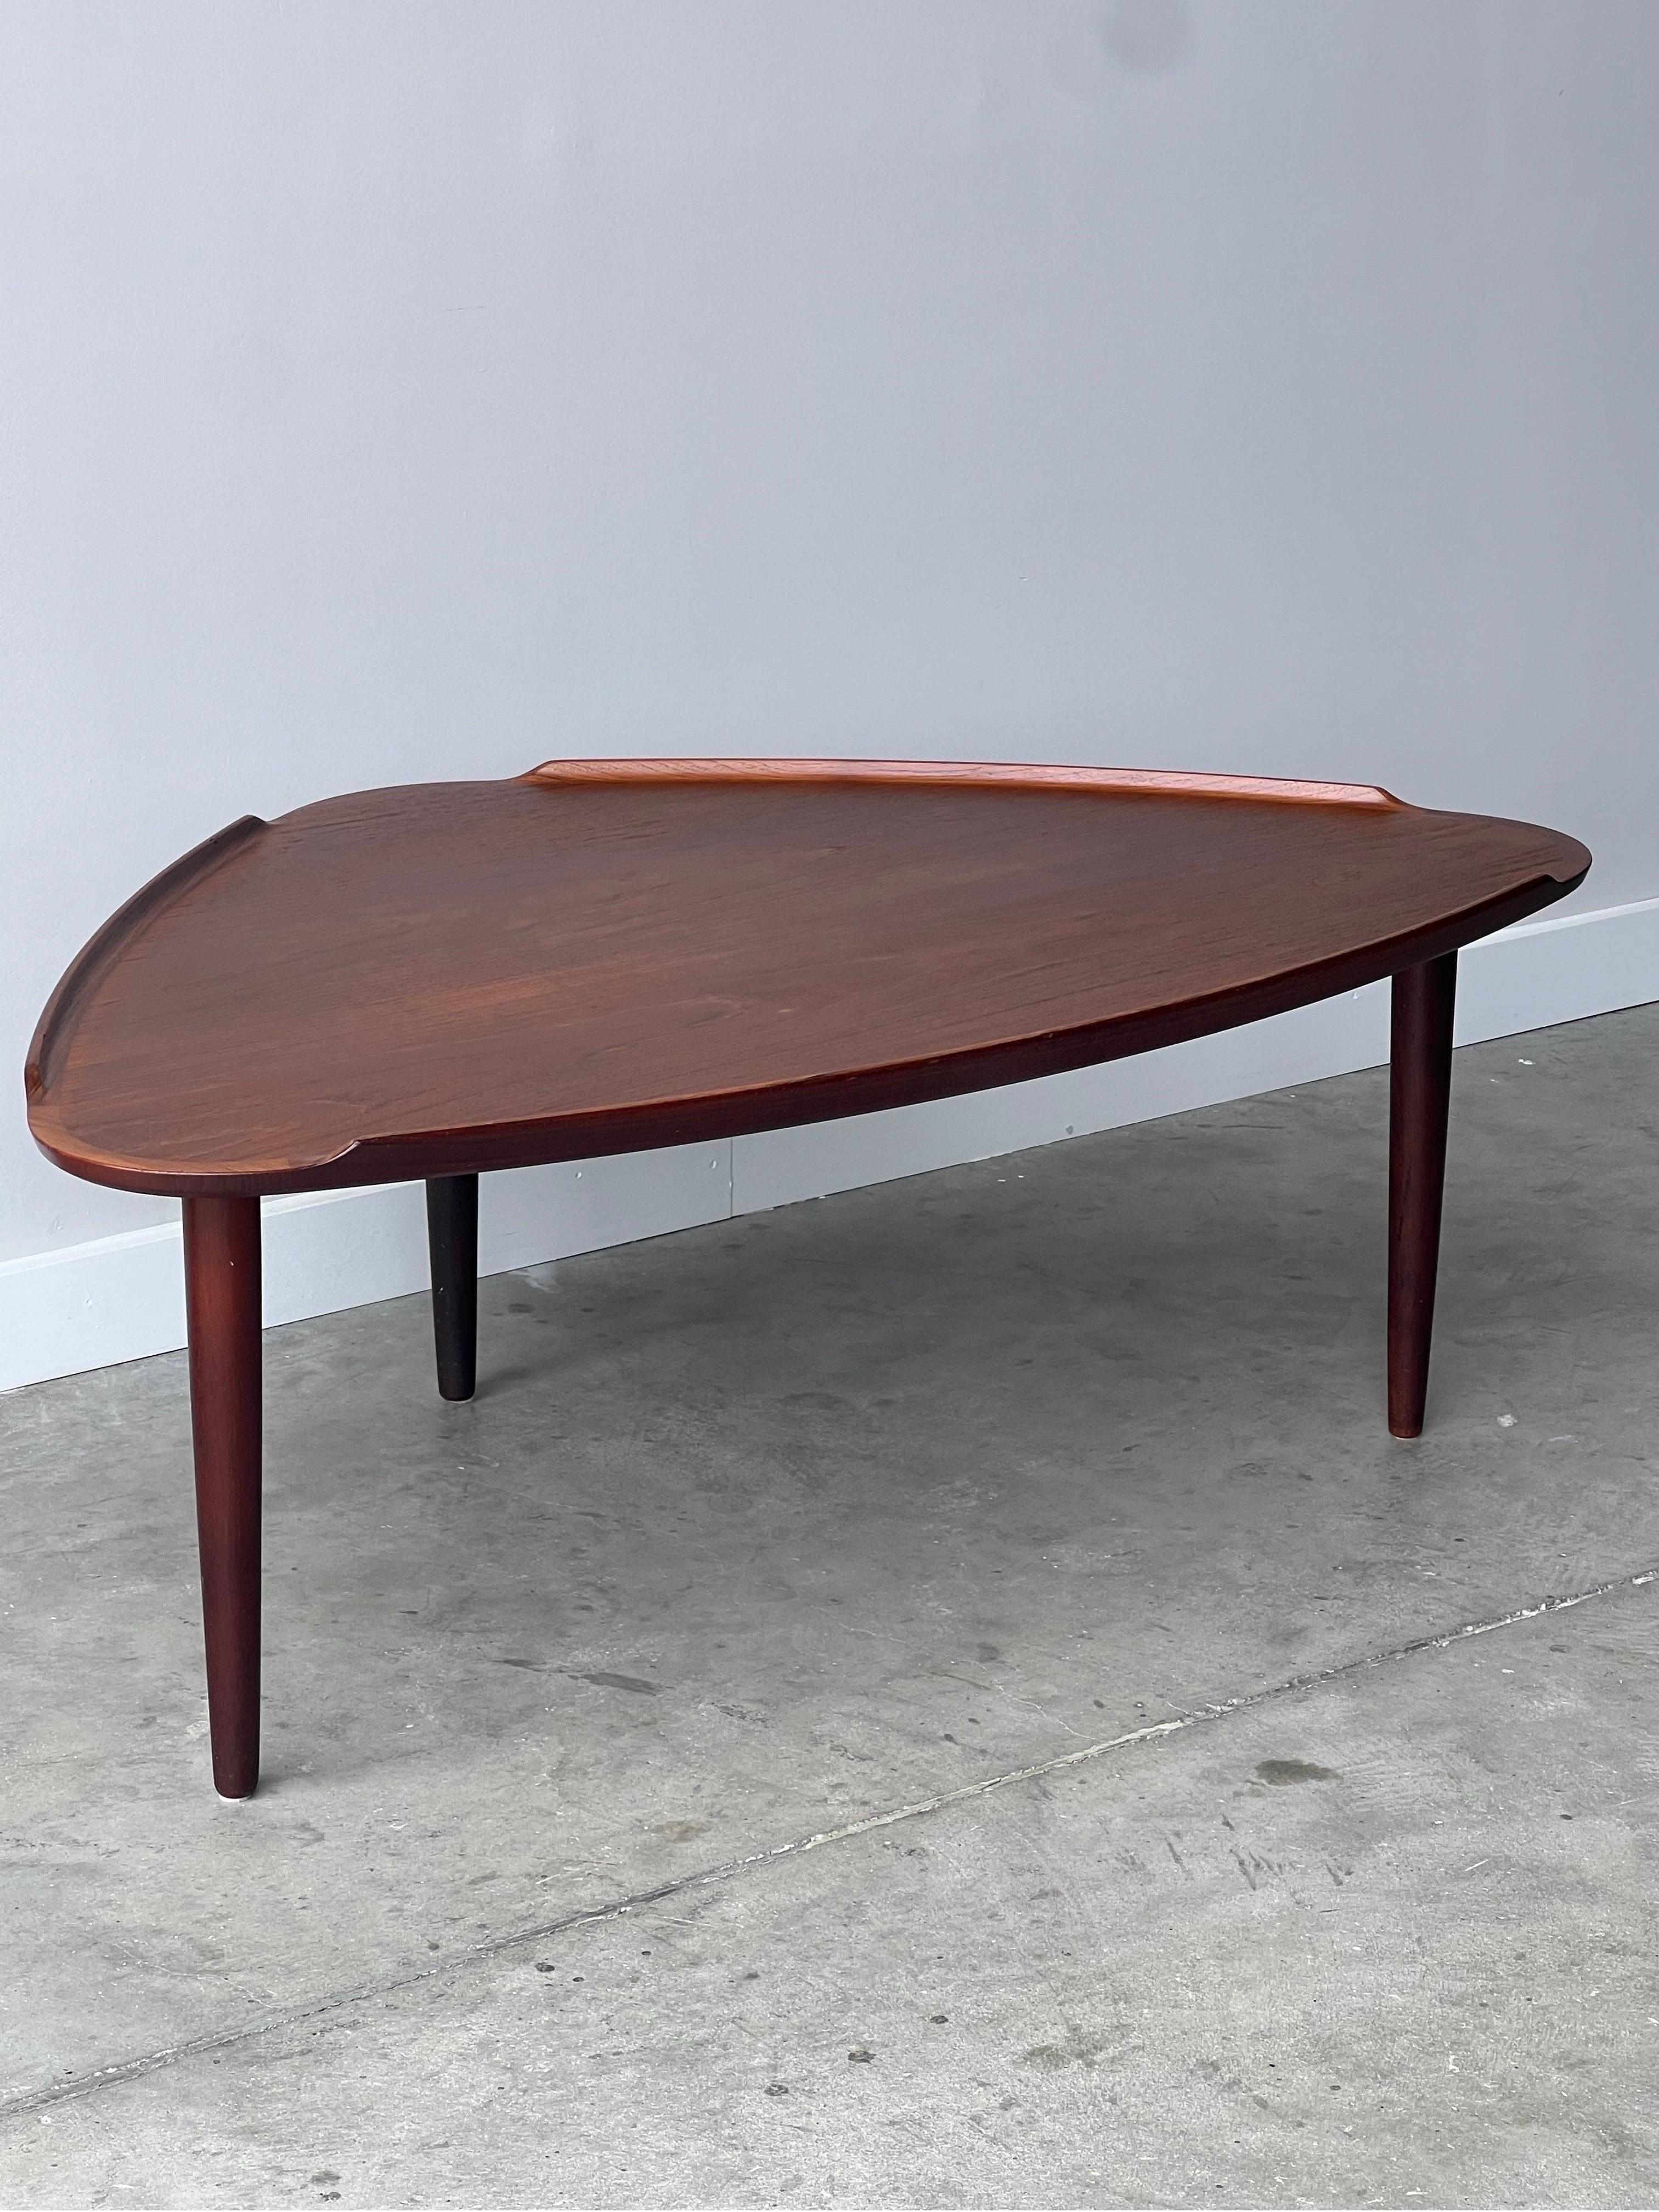 Wood Aakjaer Jorgensen Danish Teak Triangular Coffee Table For Sale